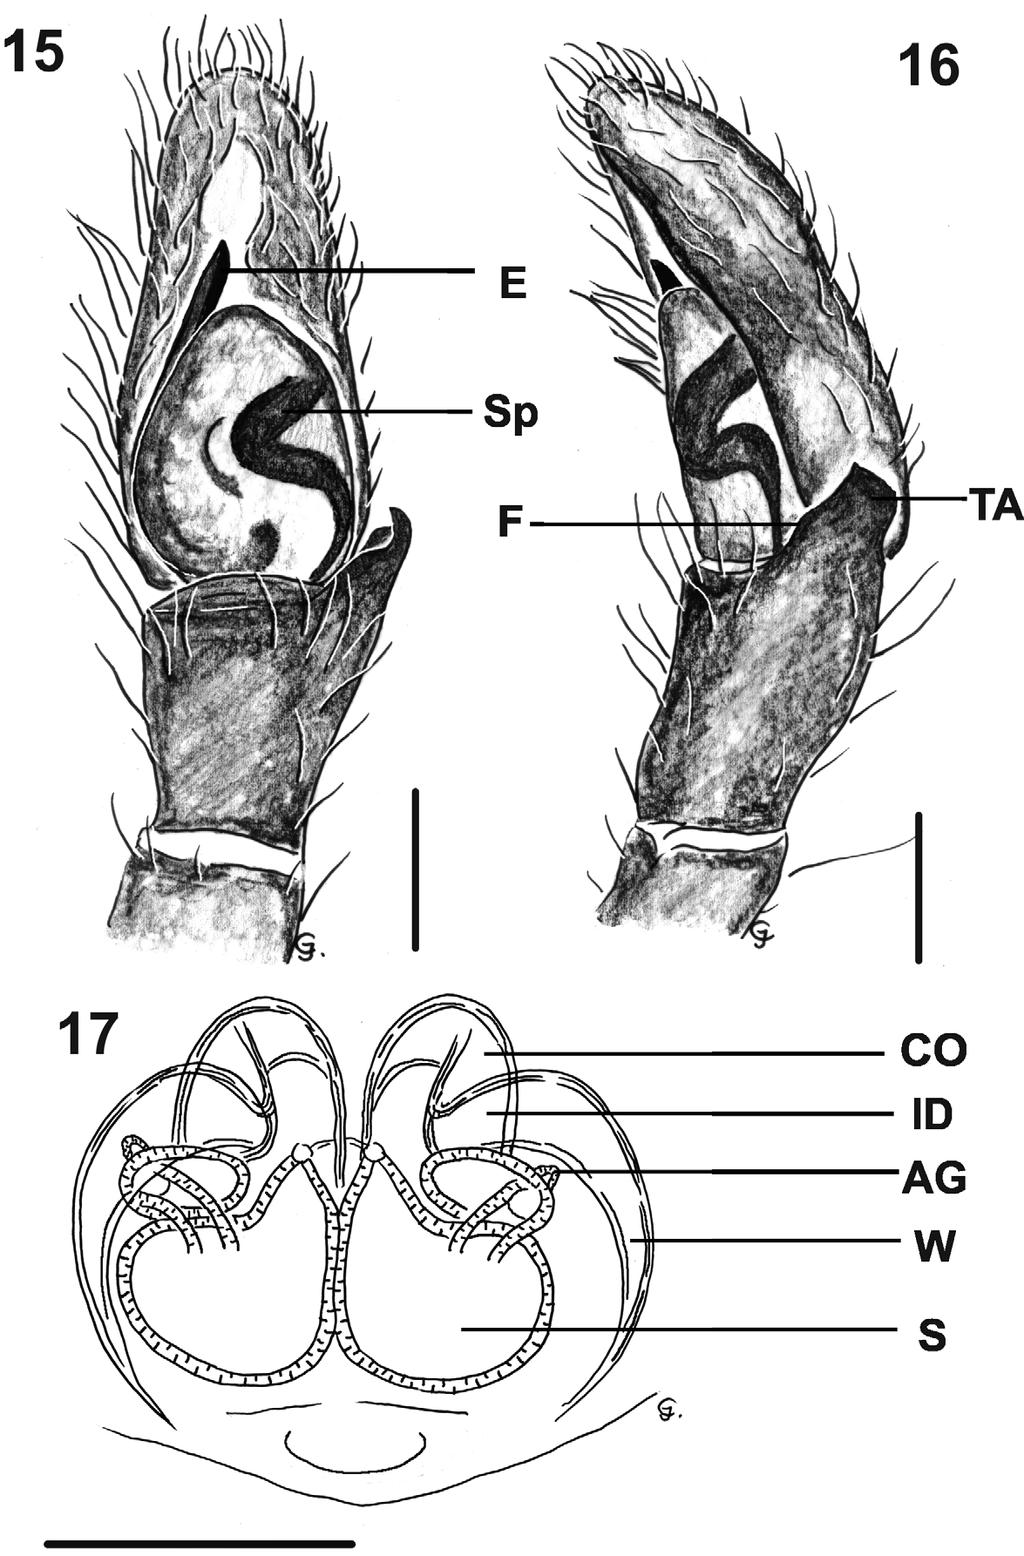 FIGURES 15 17. Diolenius sarmiensis sp. nov., male and female copulatory organs.